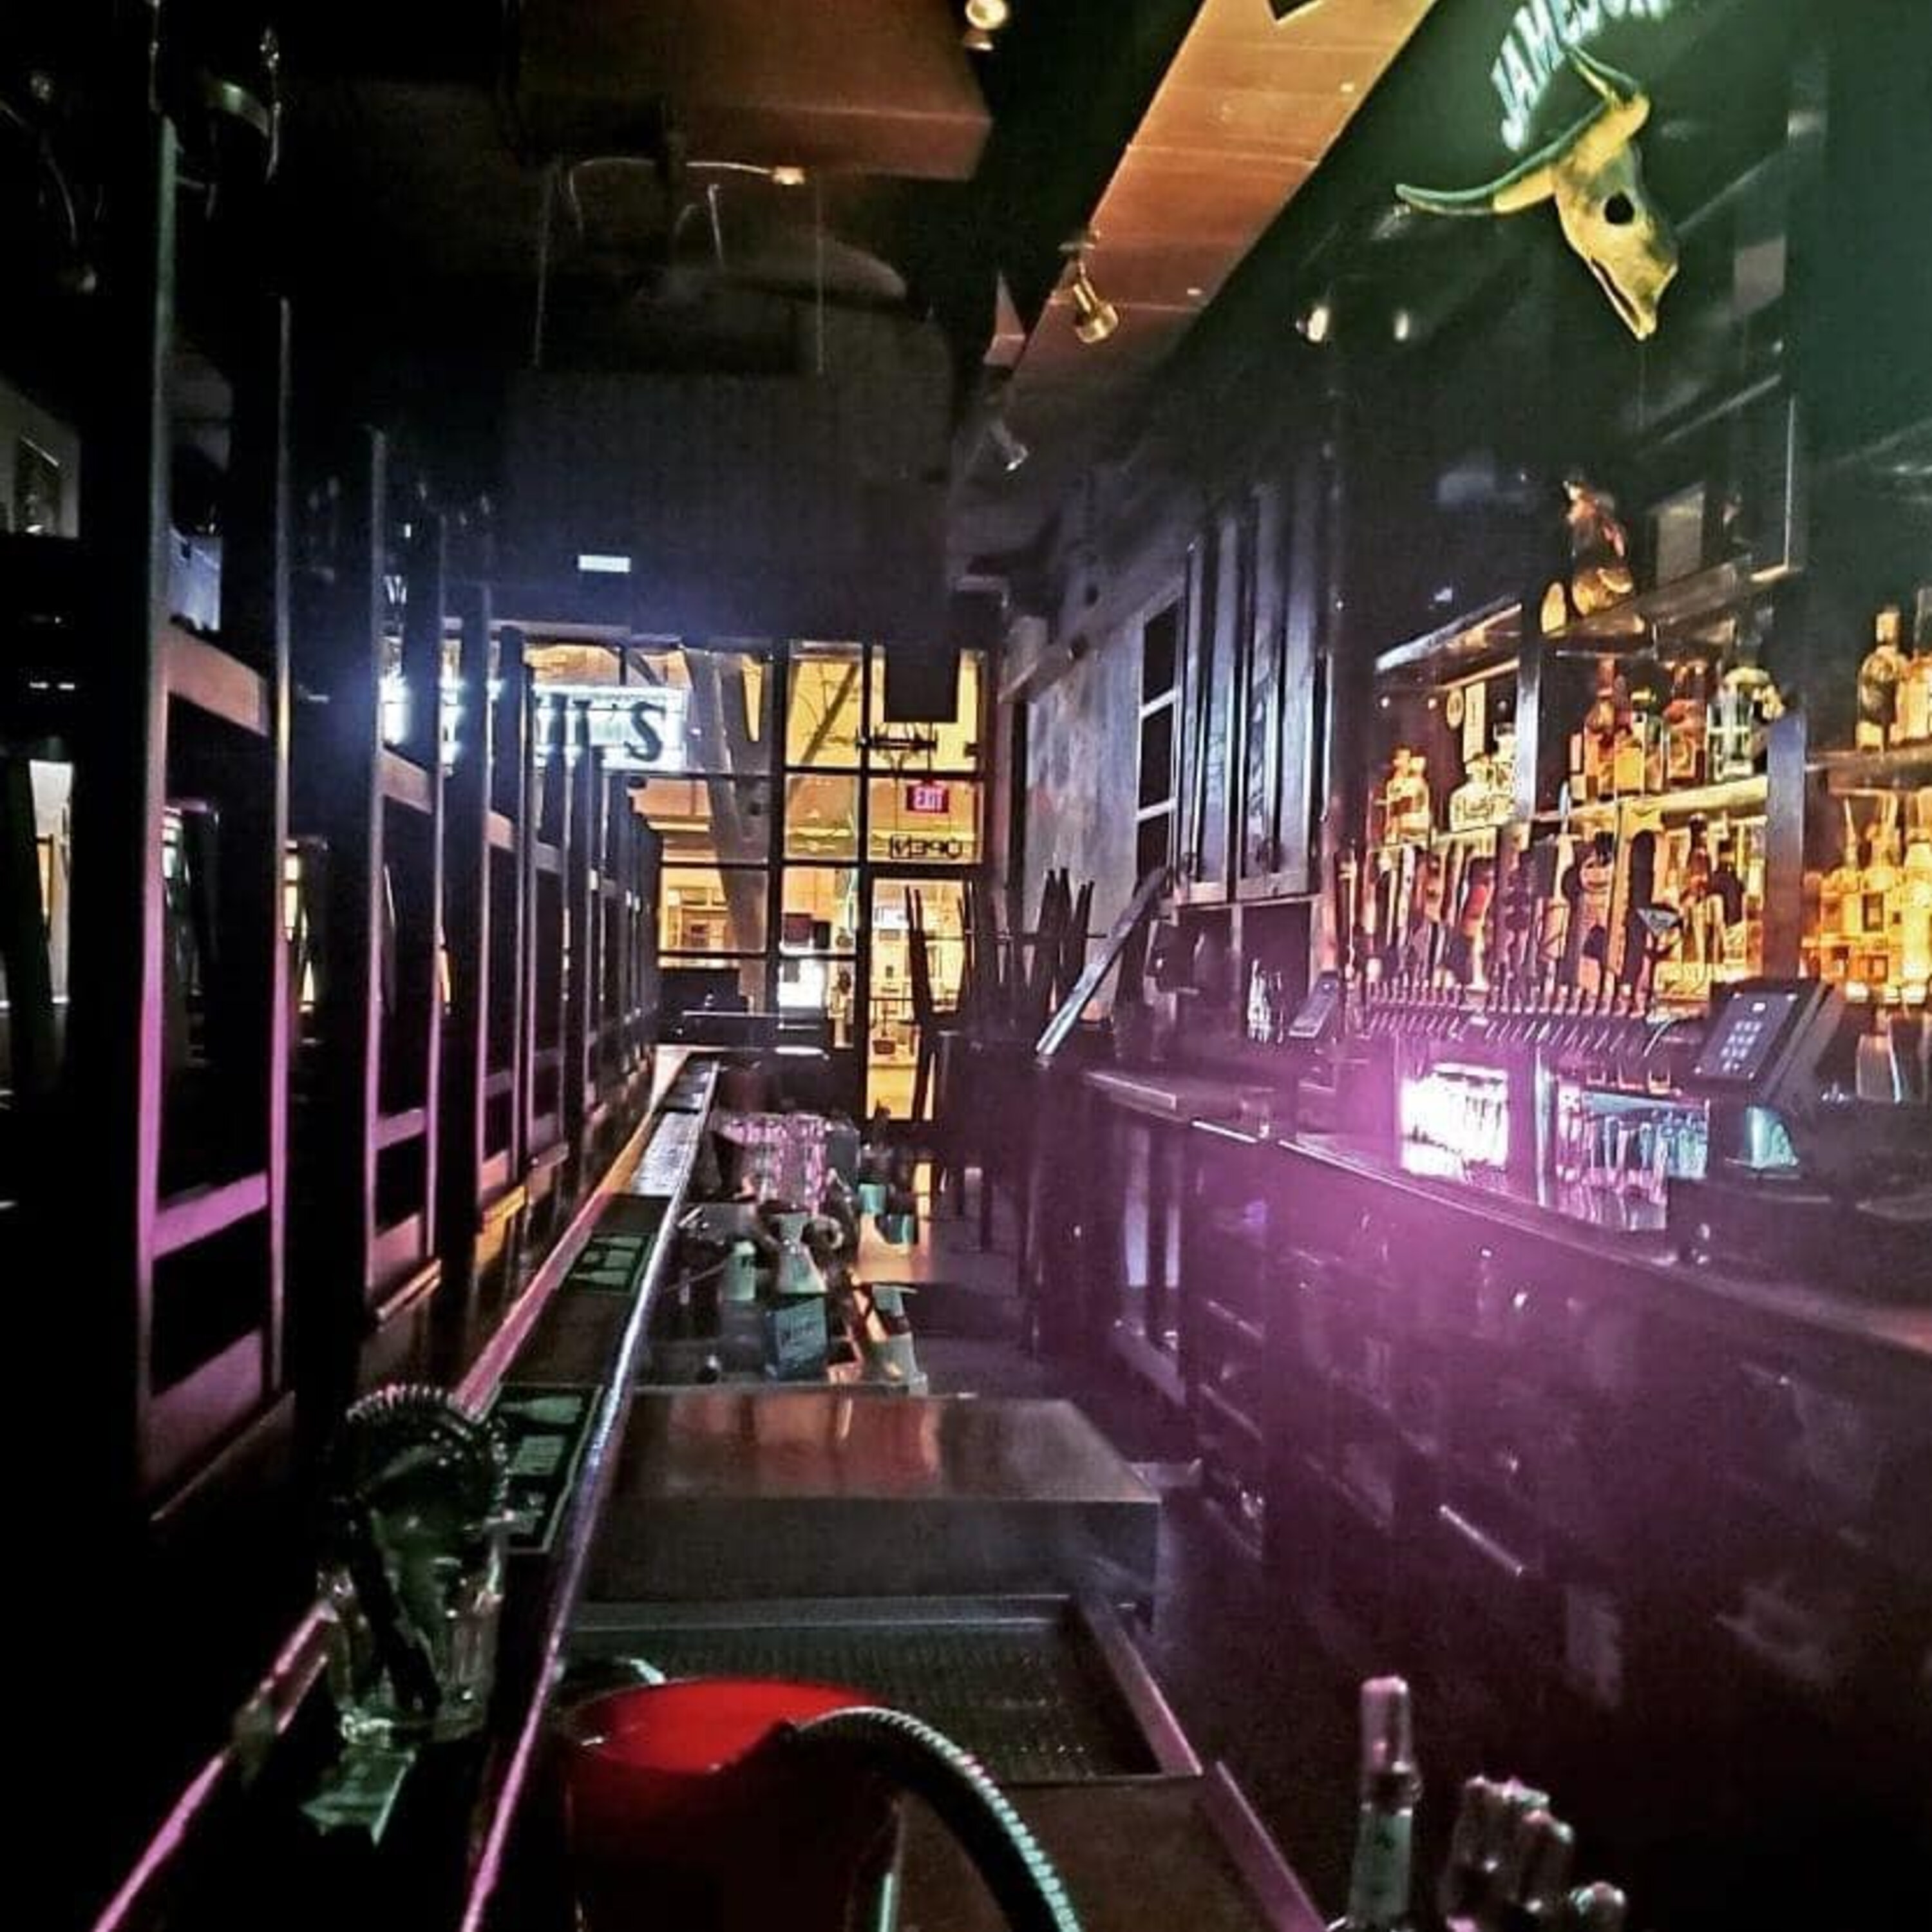 REPLAY: Downtown Winston-Salem Podcast - Bull's Tavern Image